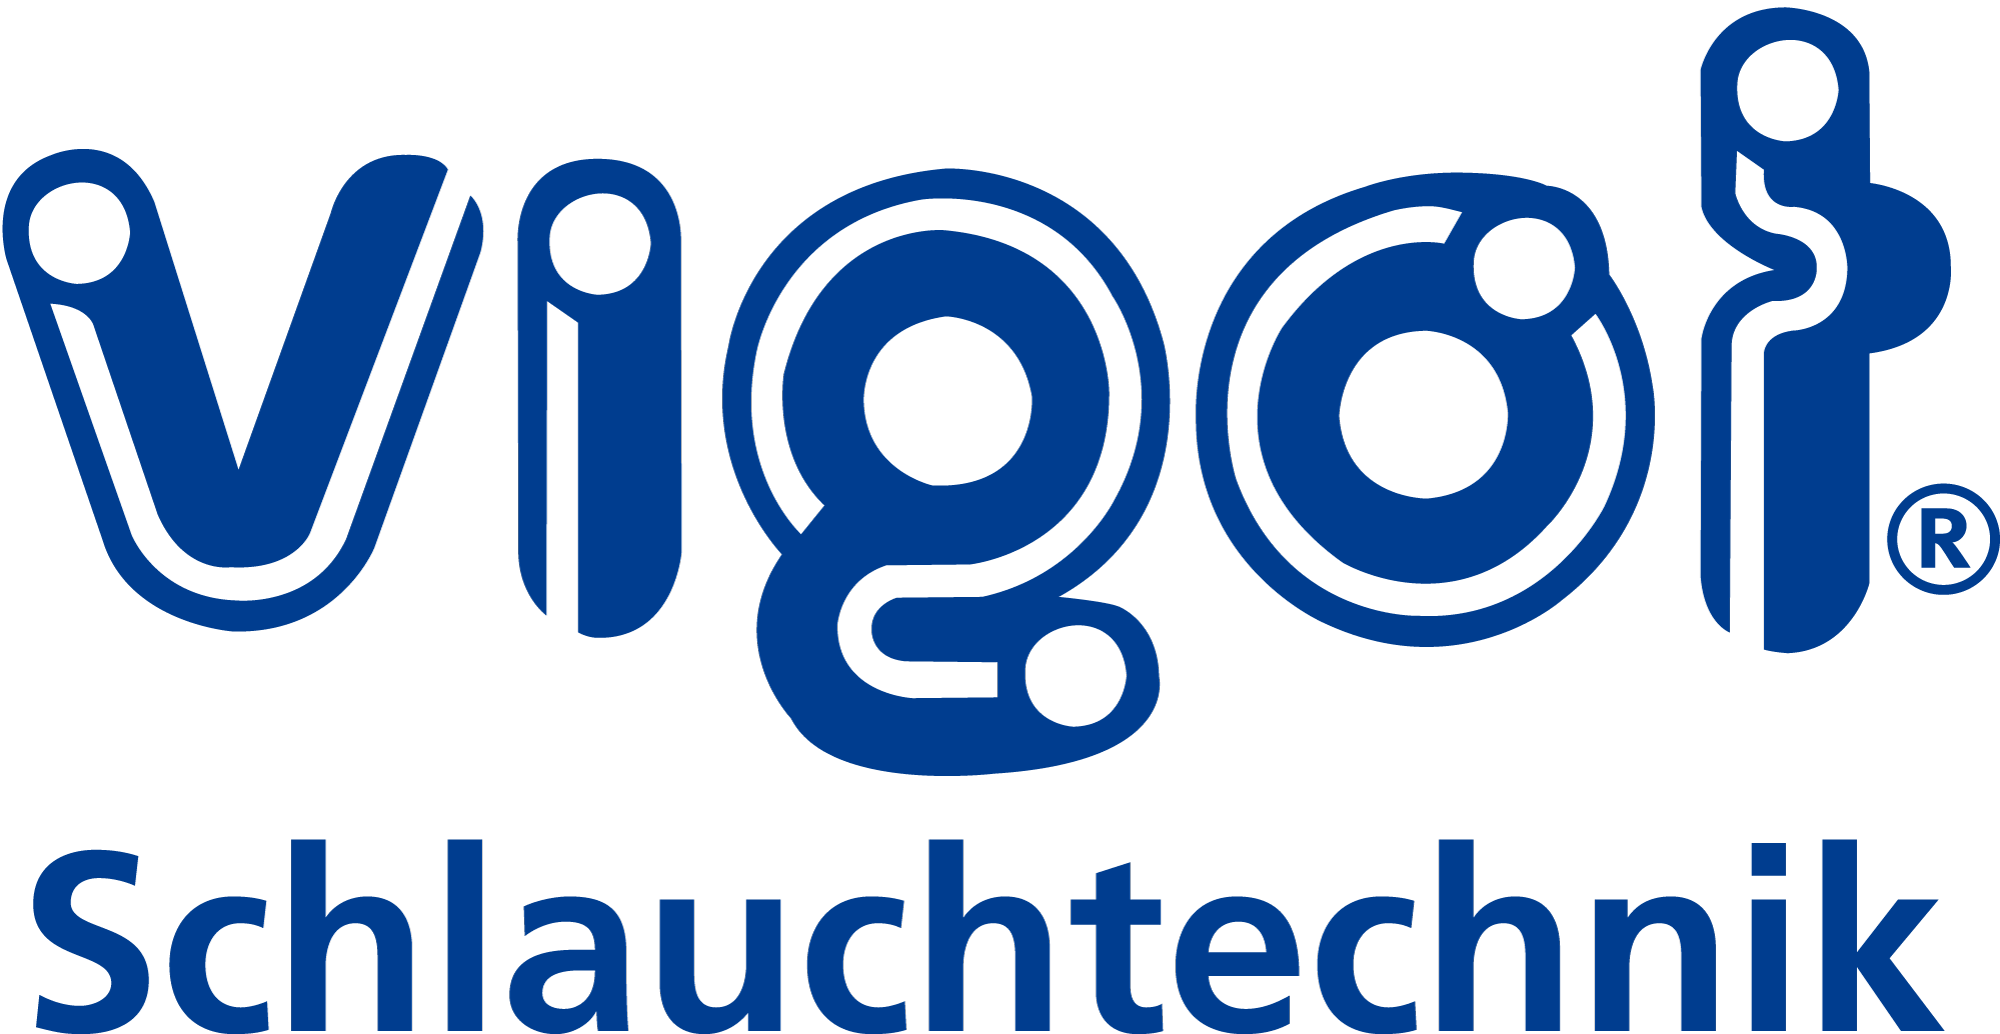 VIGOT Logo Schlauchtechnik RGB